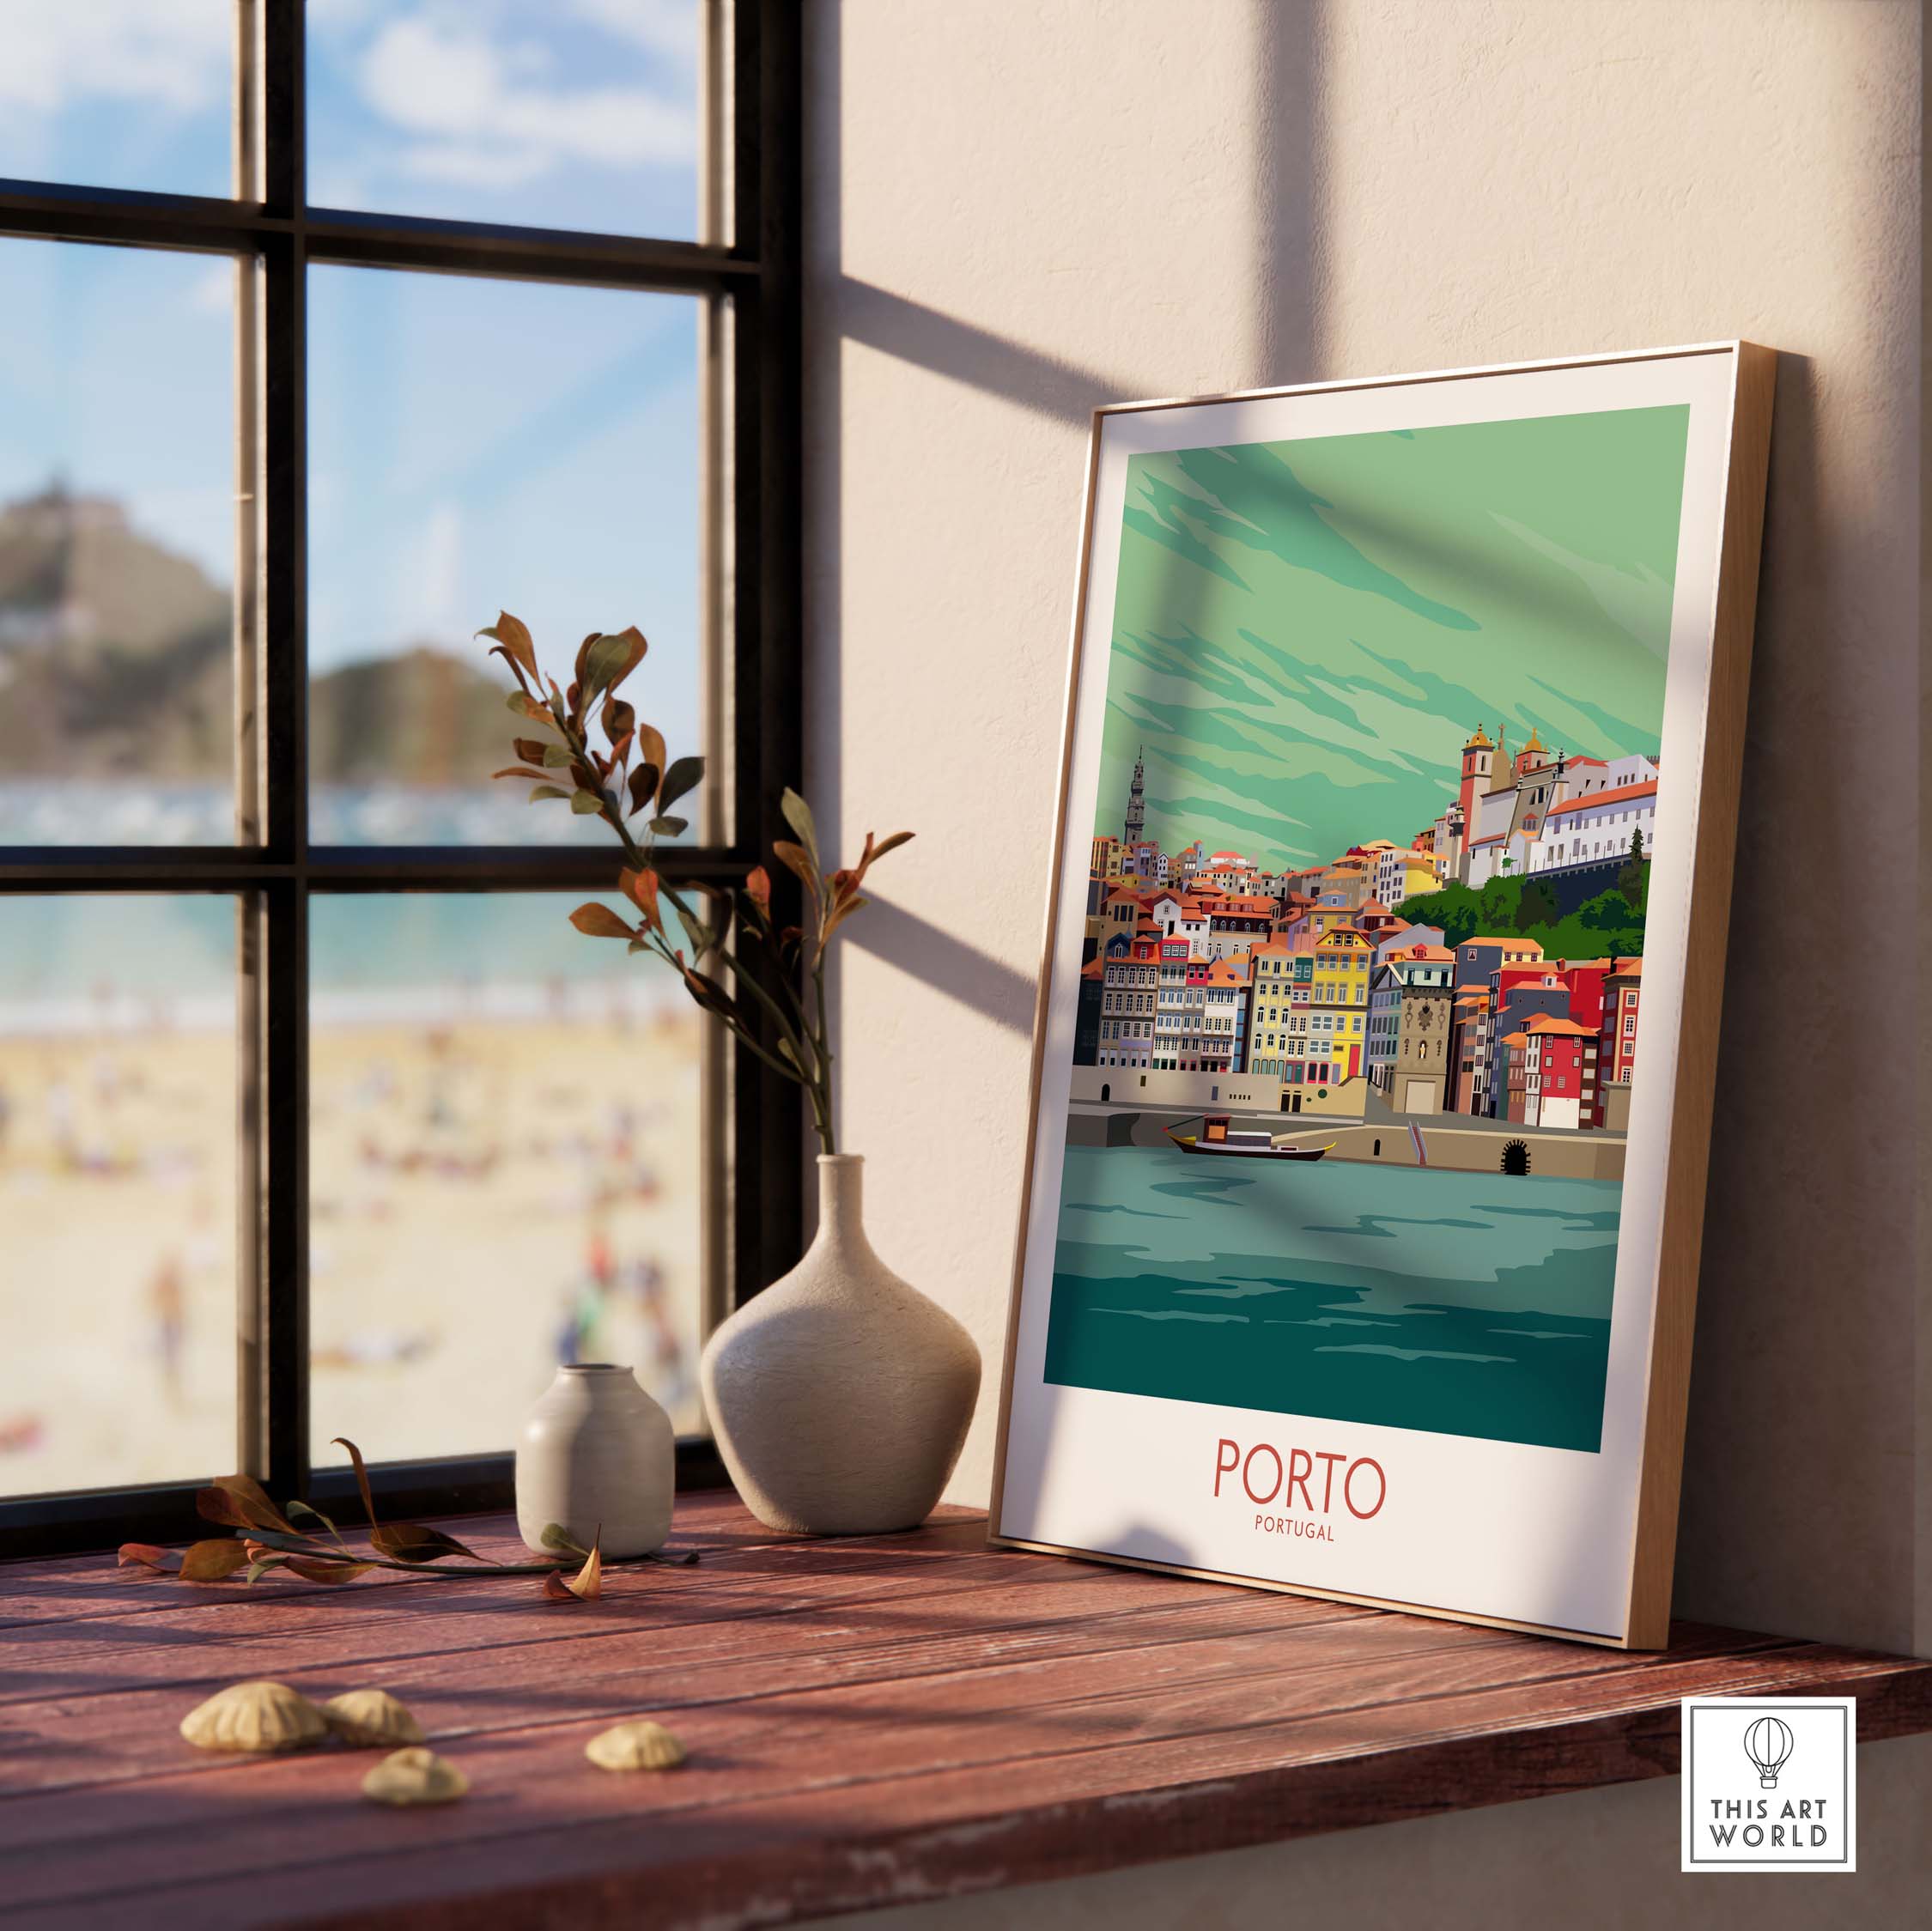 porto portugal travel poster